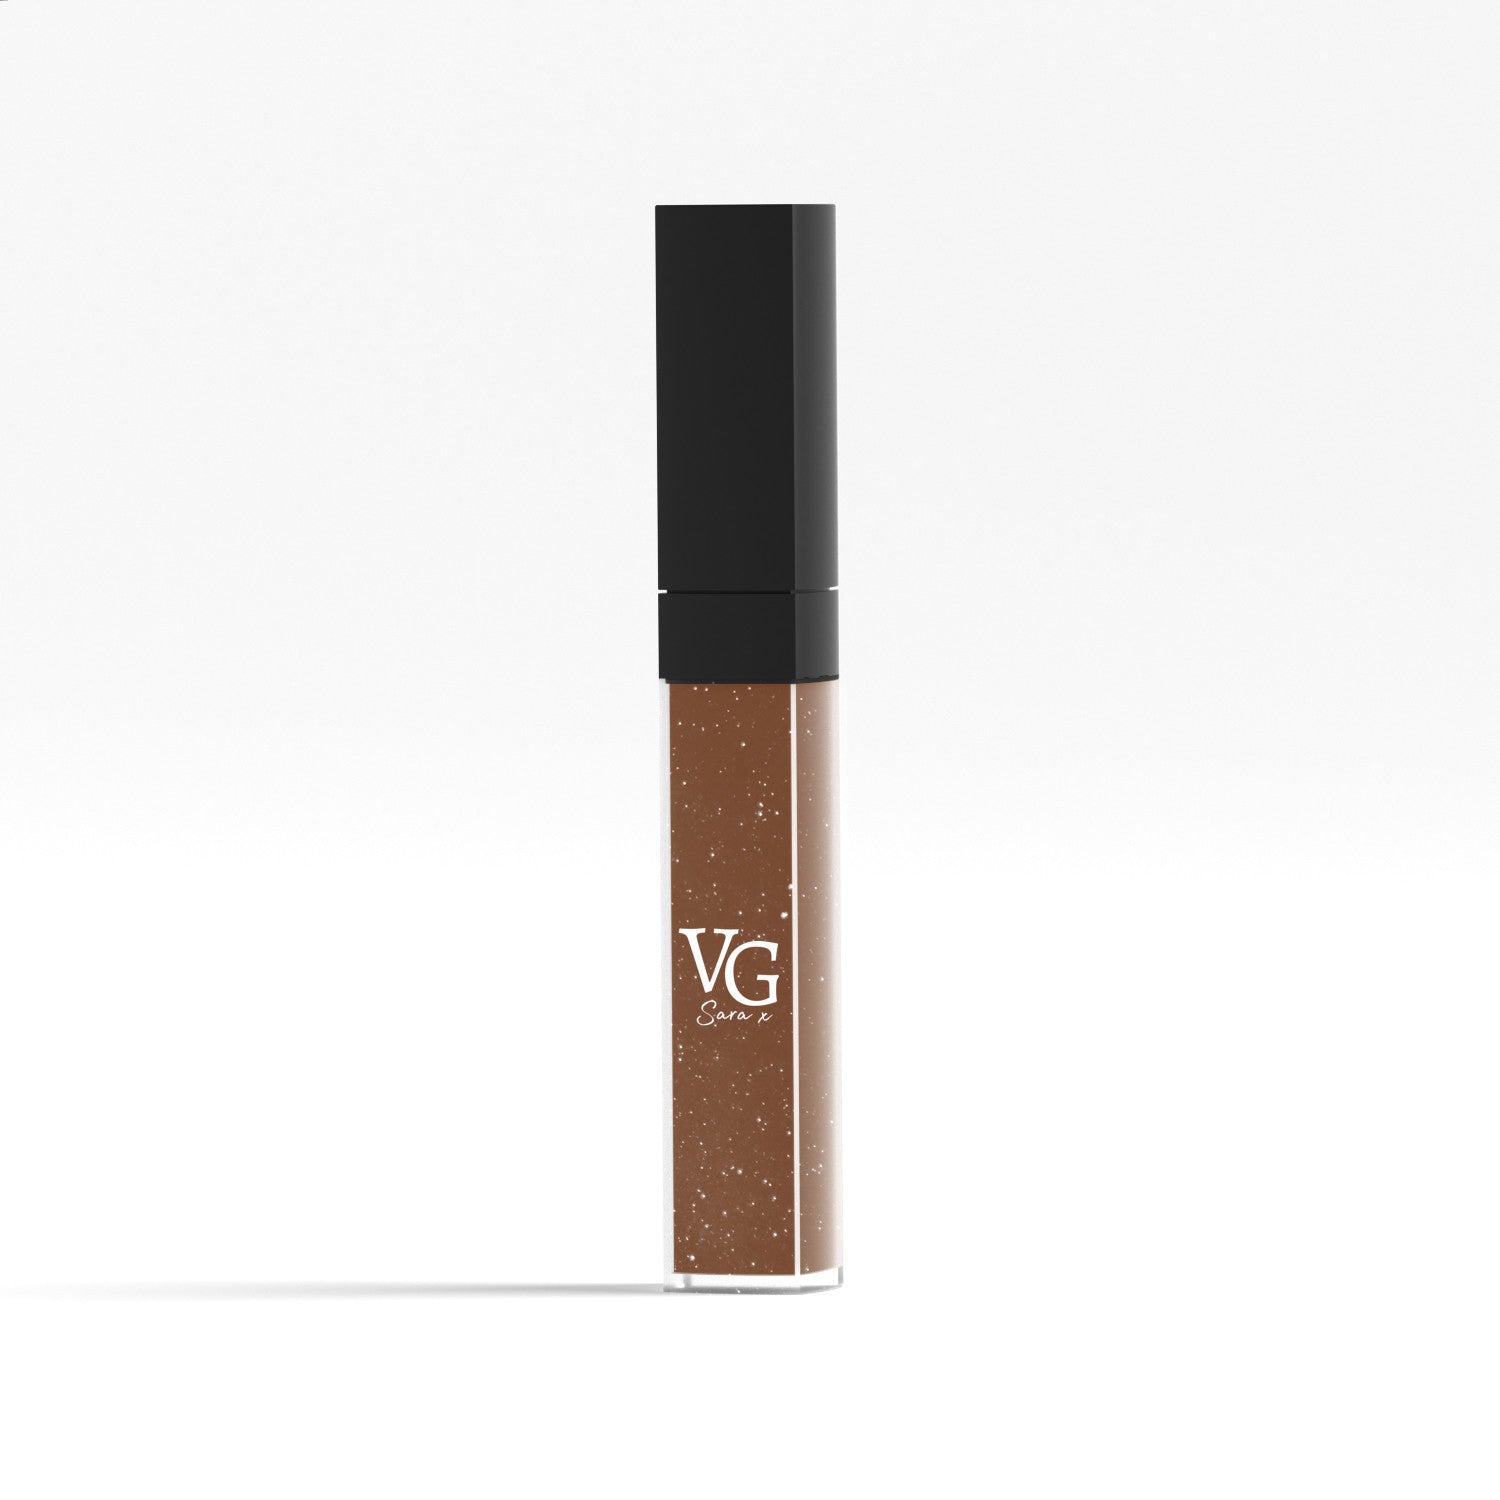 Long-lasting vegan liquid lipstick in a neutral shade